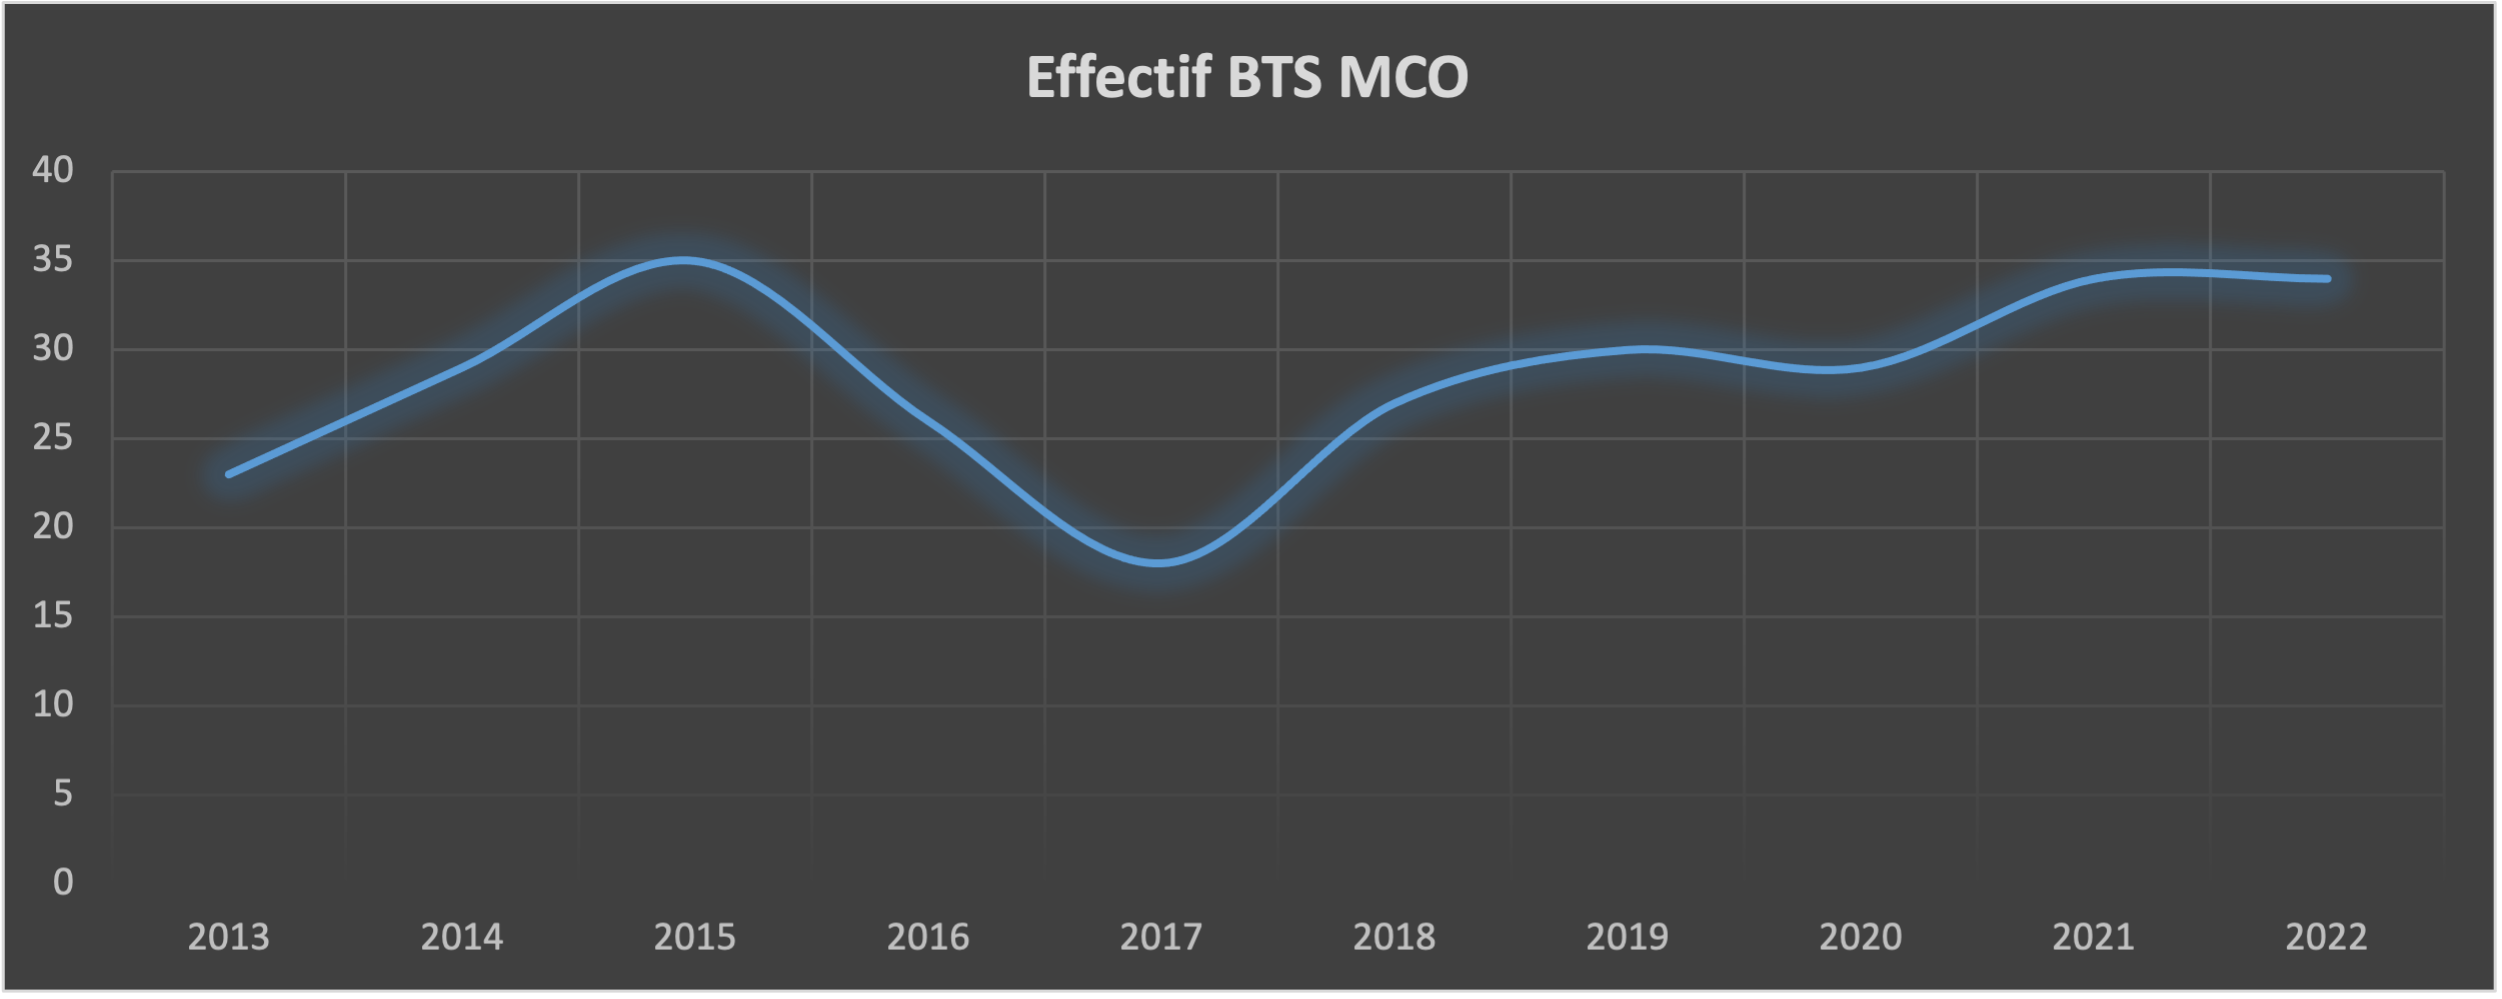 Effectif MCO 2022